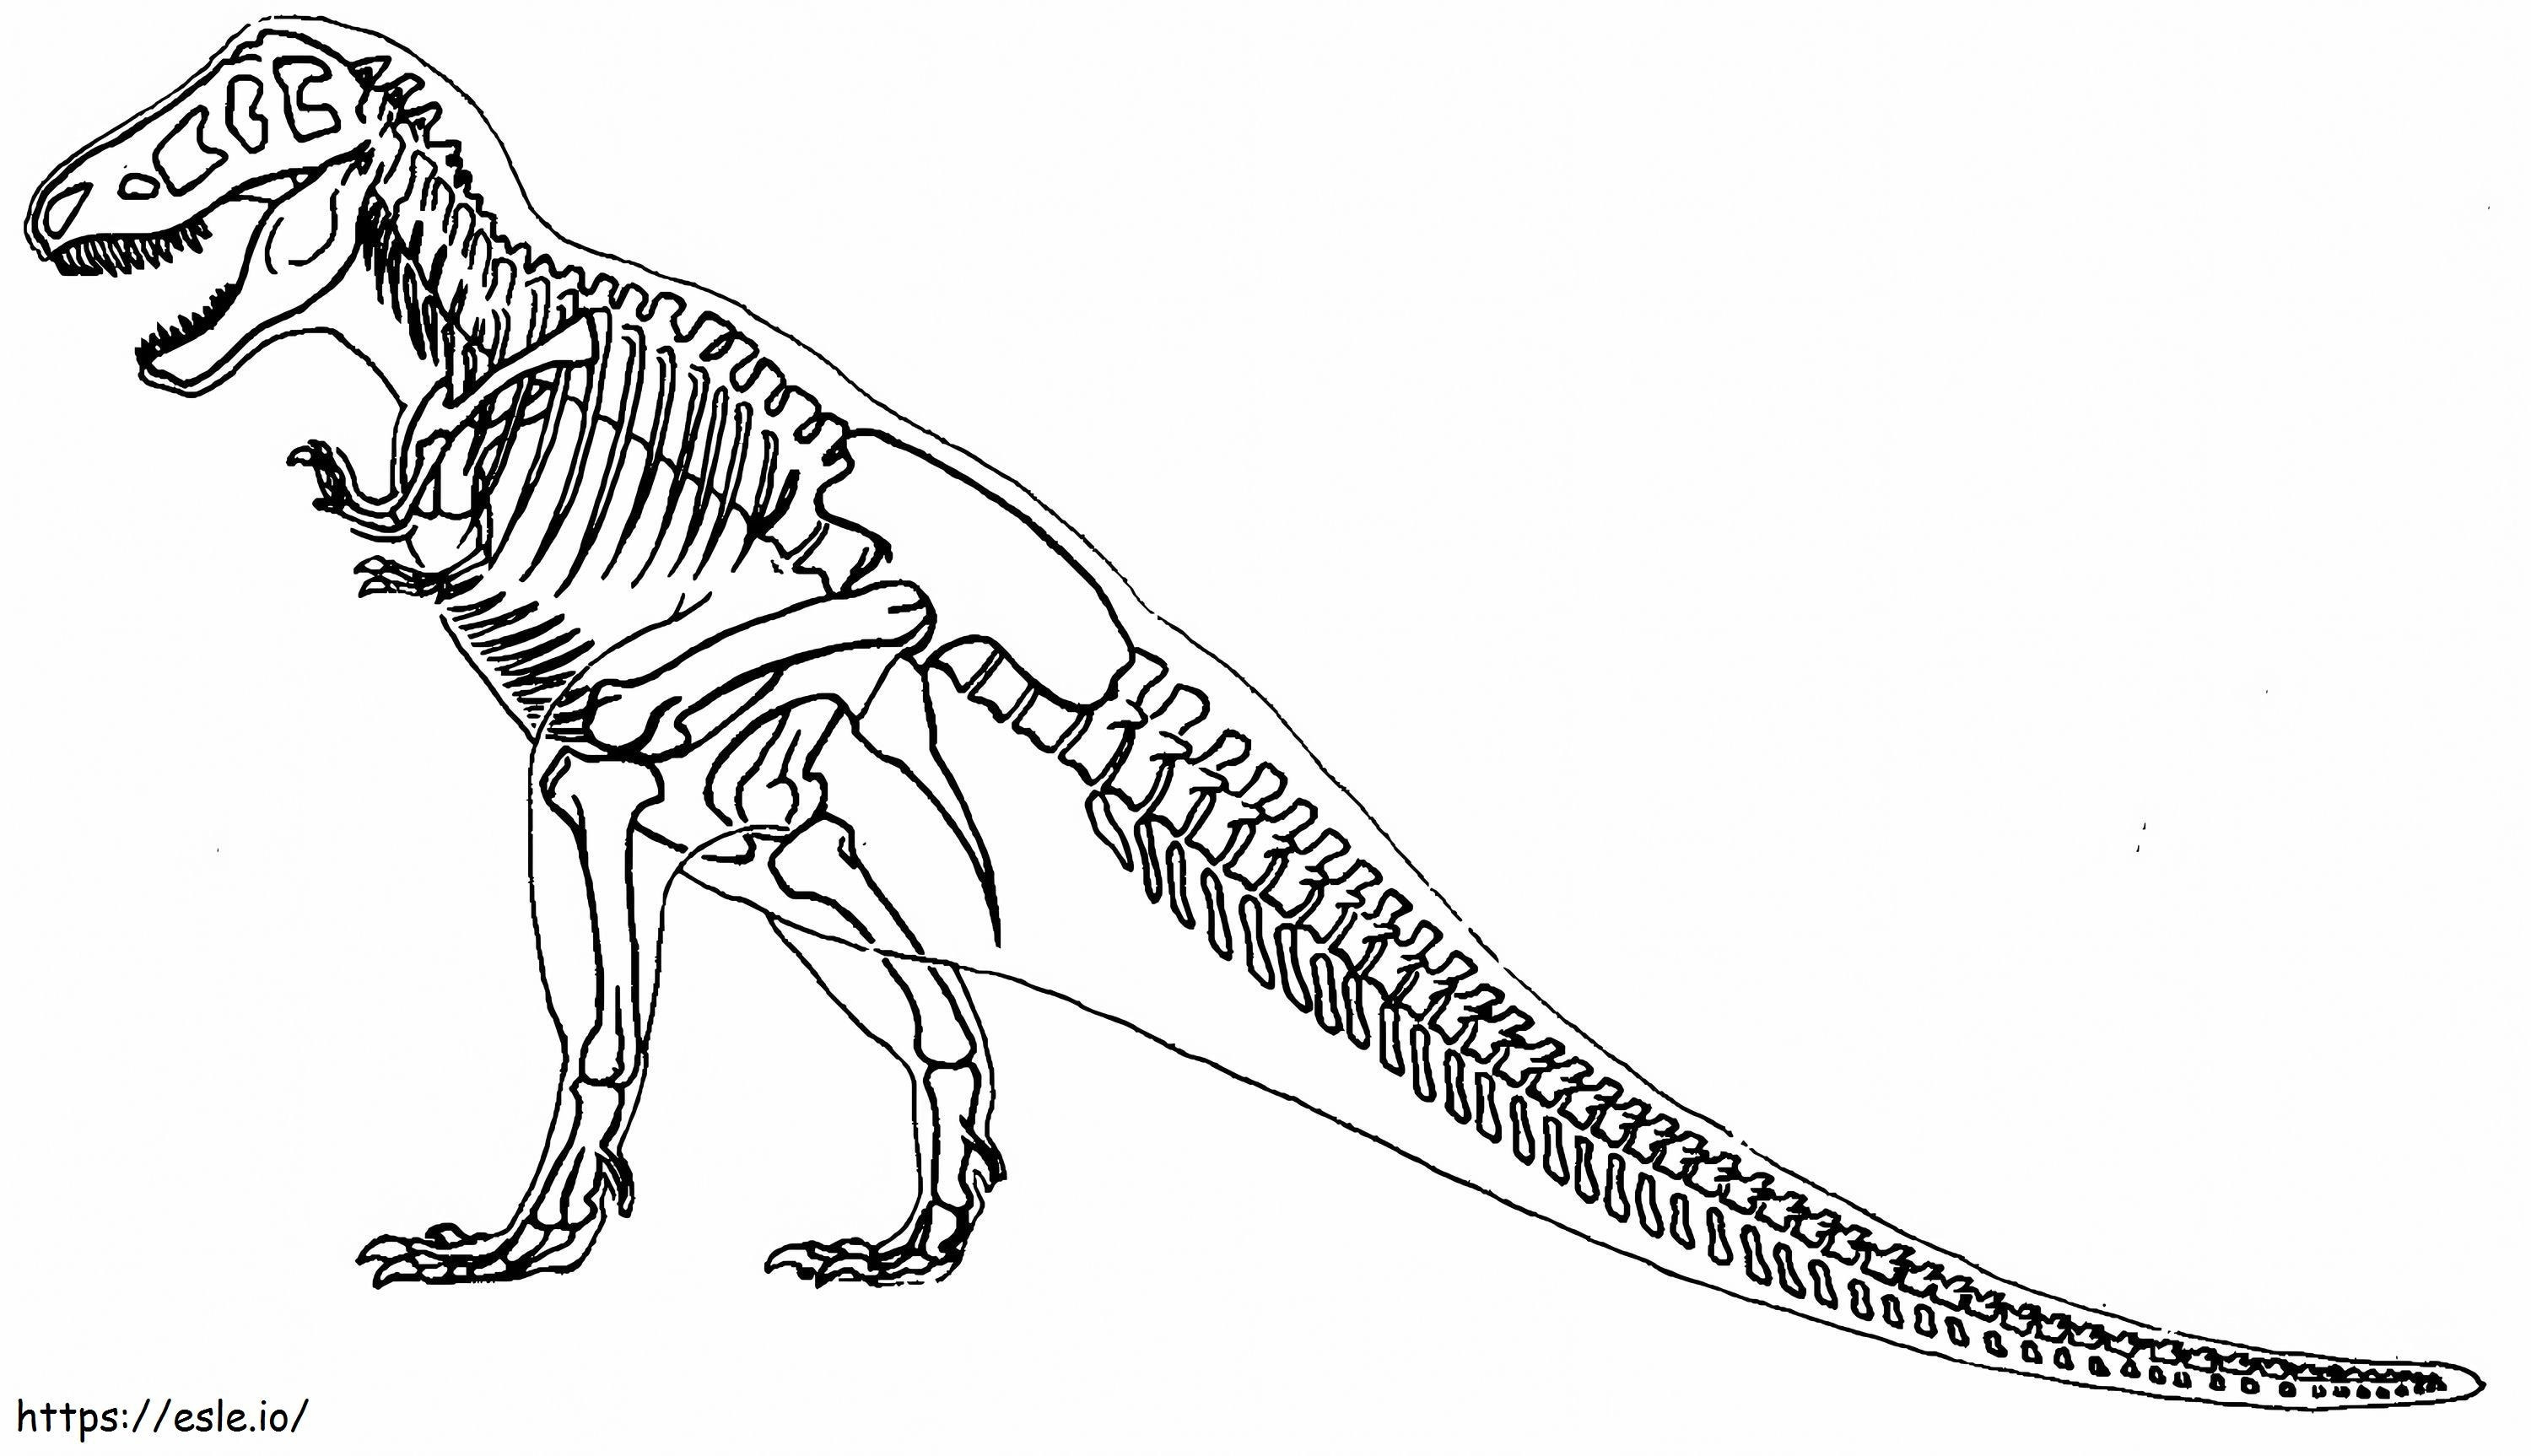 T-Rex-skelet kleurplaat kleurplaat